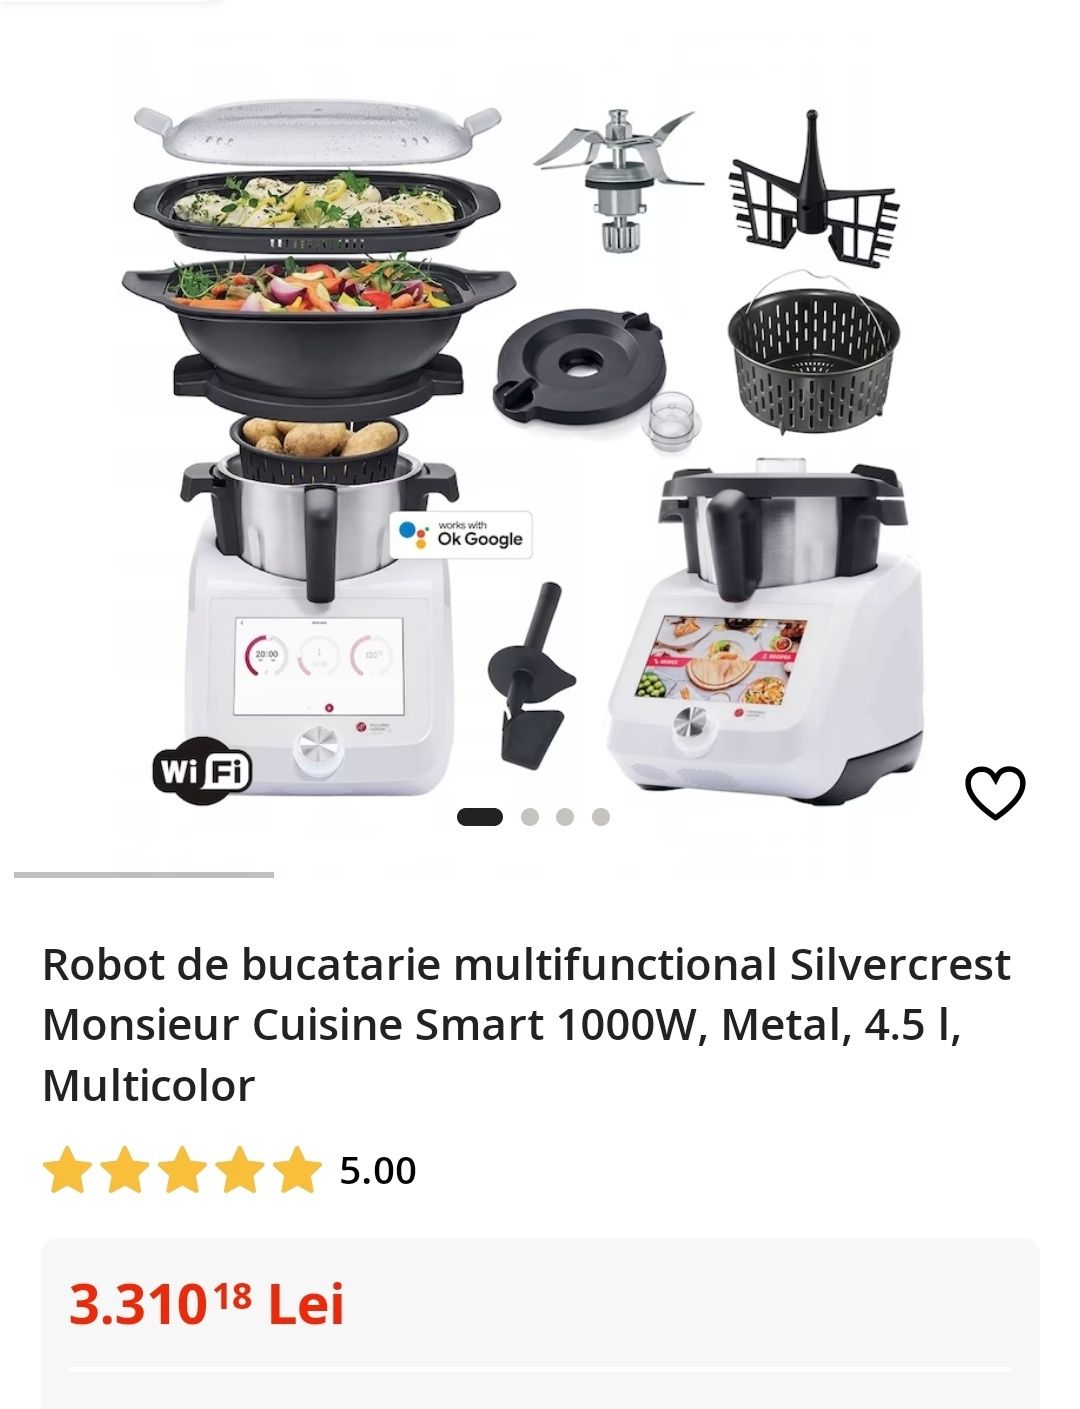 Robot de bucatarie multifunctional Silvercrest Monsieur Cuisine Smart